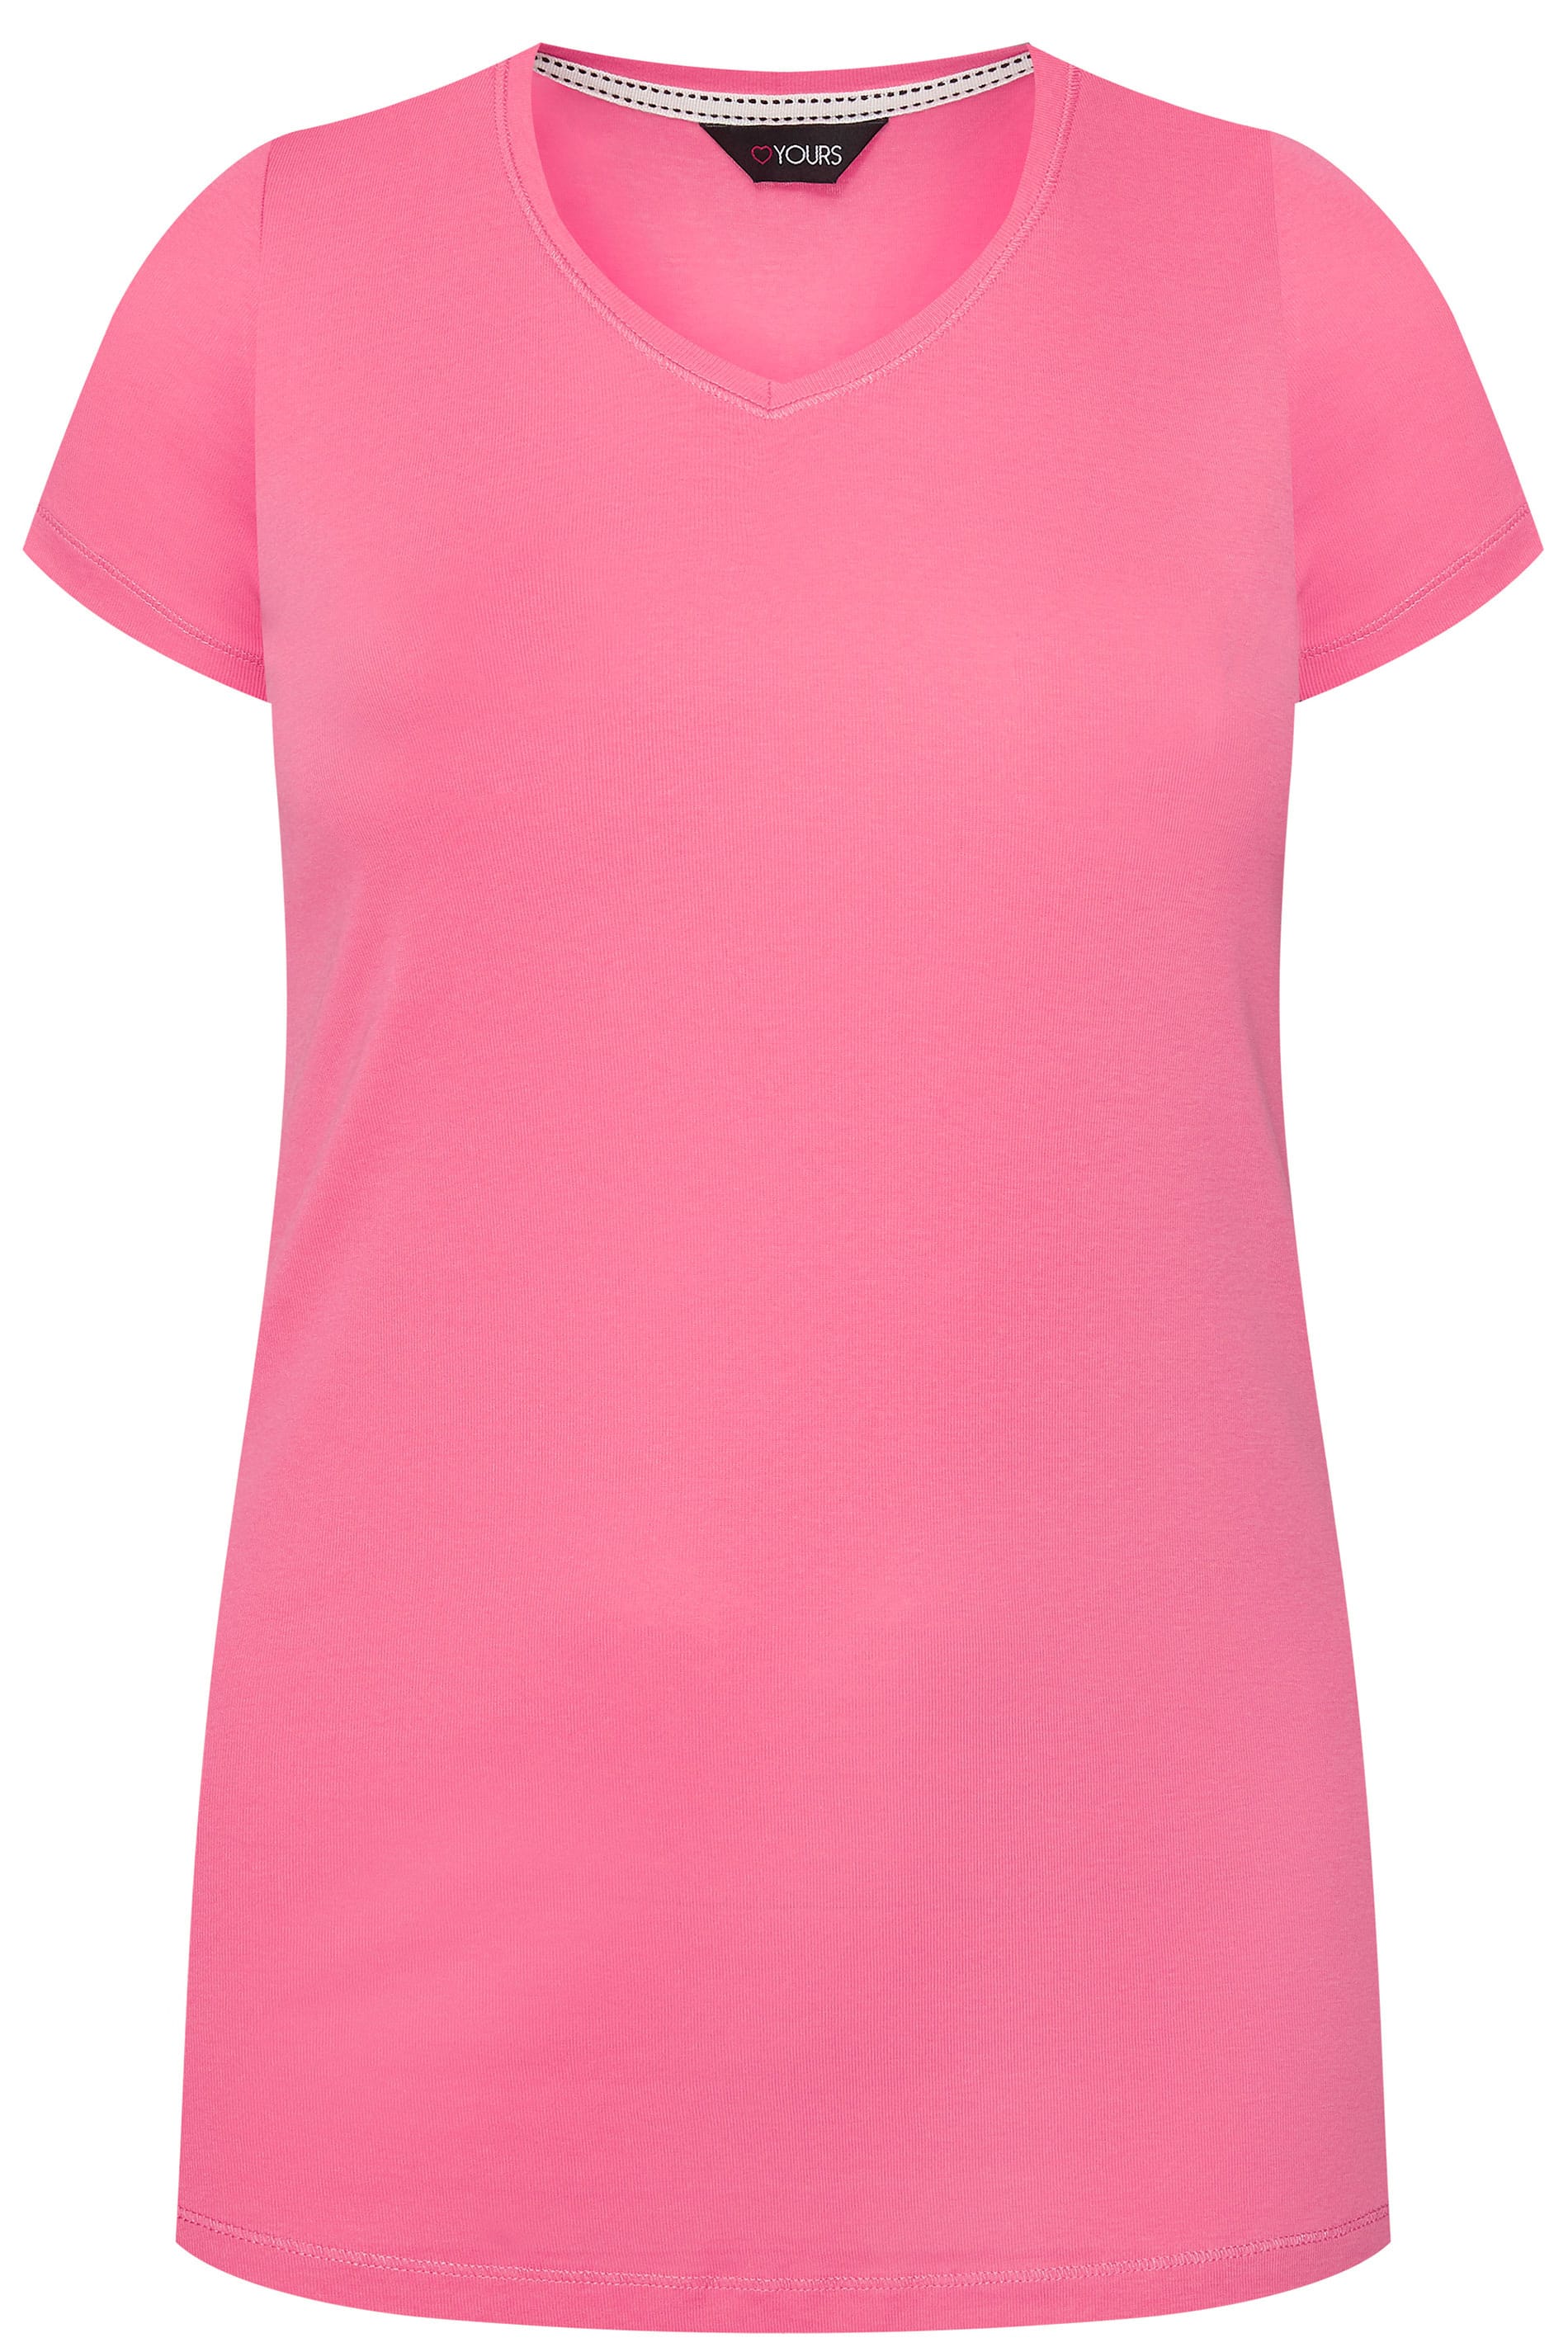 Plus Size Magenta Pink V-Neck T-Shirt | Sizes 16 to 36 | Yours Clothing